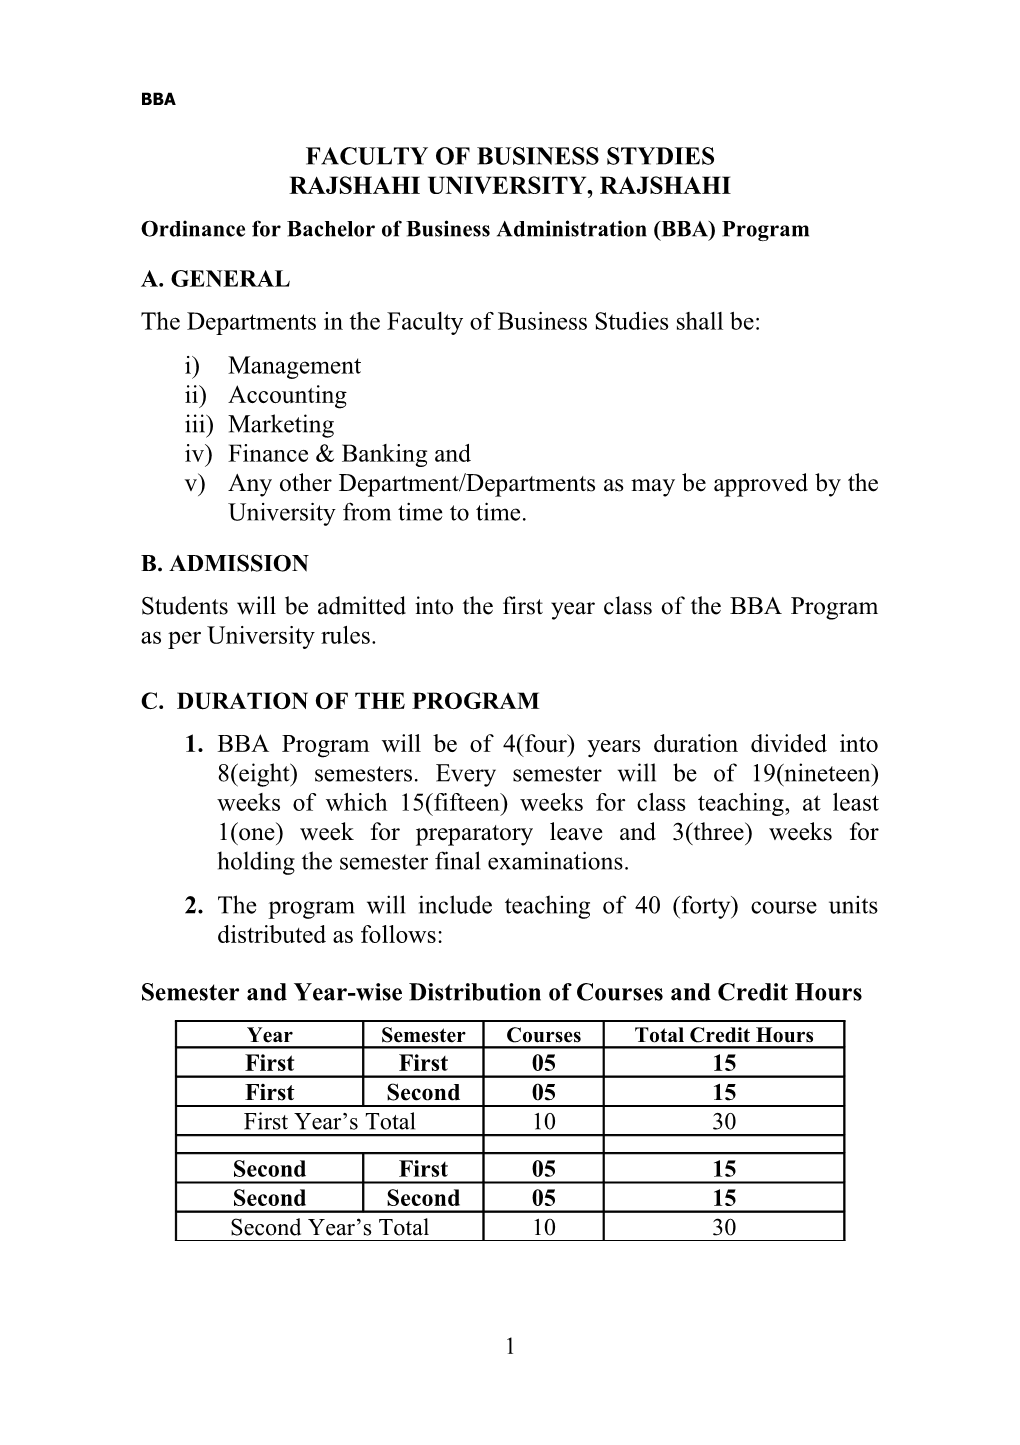 Ordinance for Bachelor of Business Administration (BBA) Program